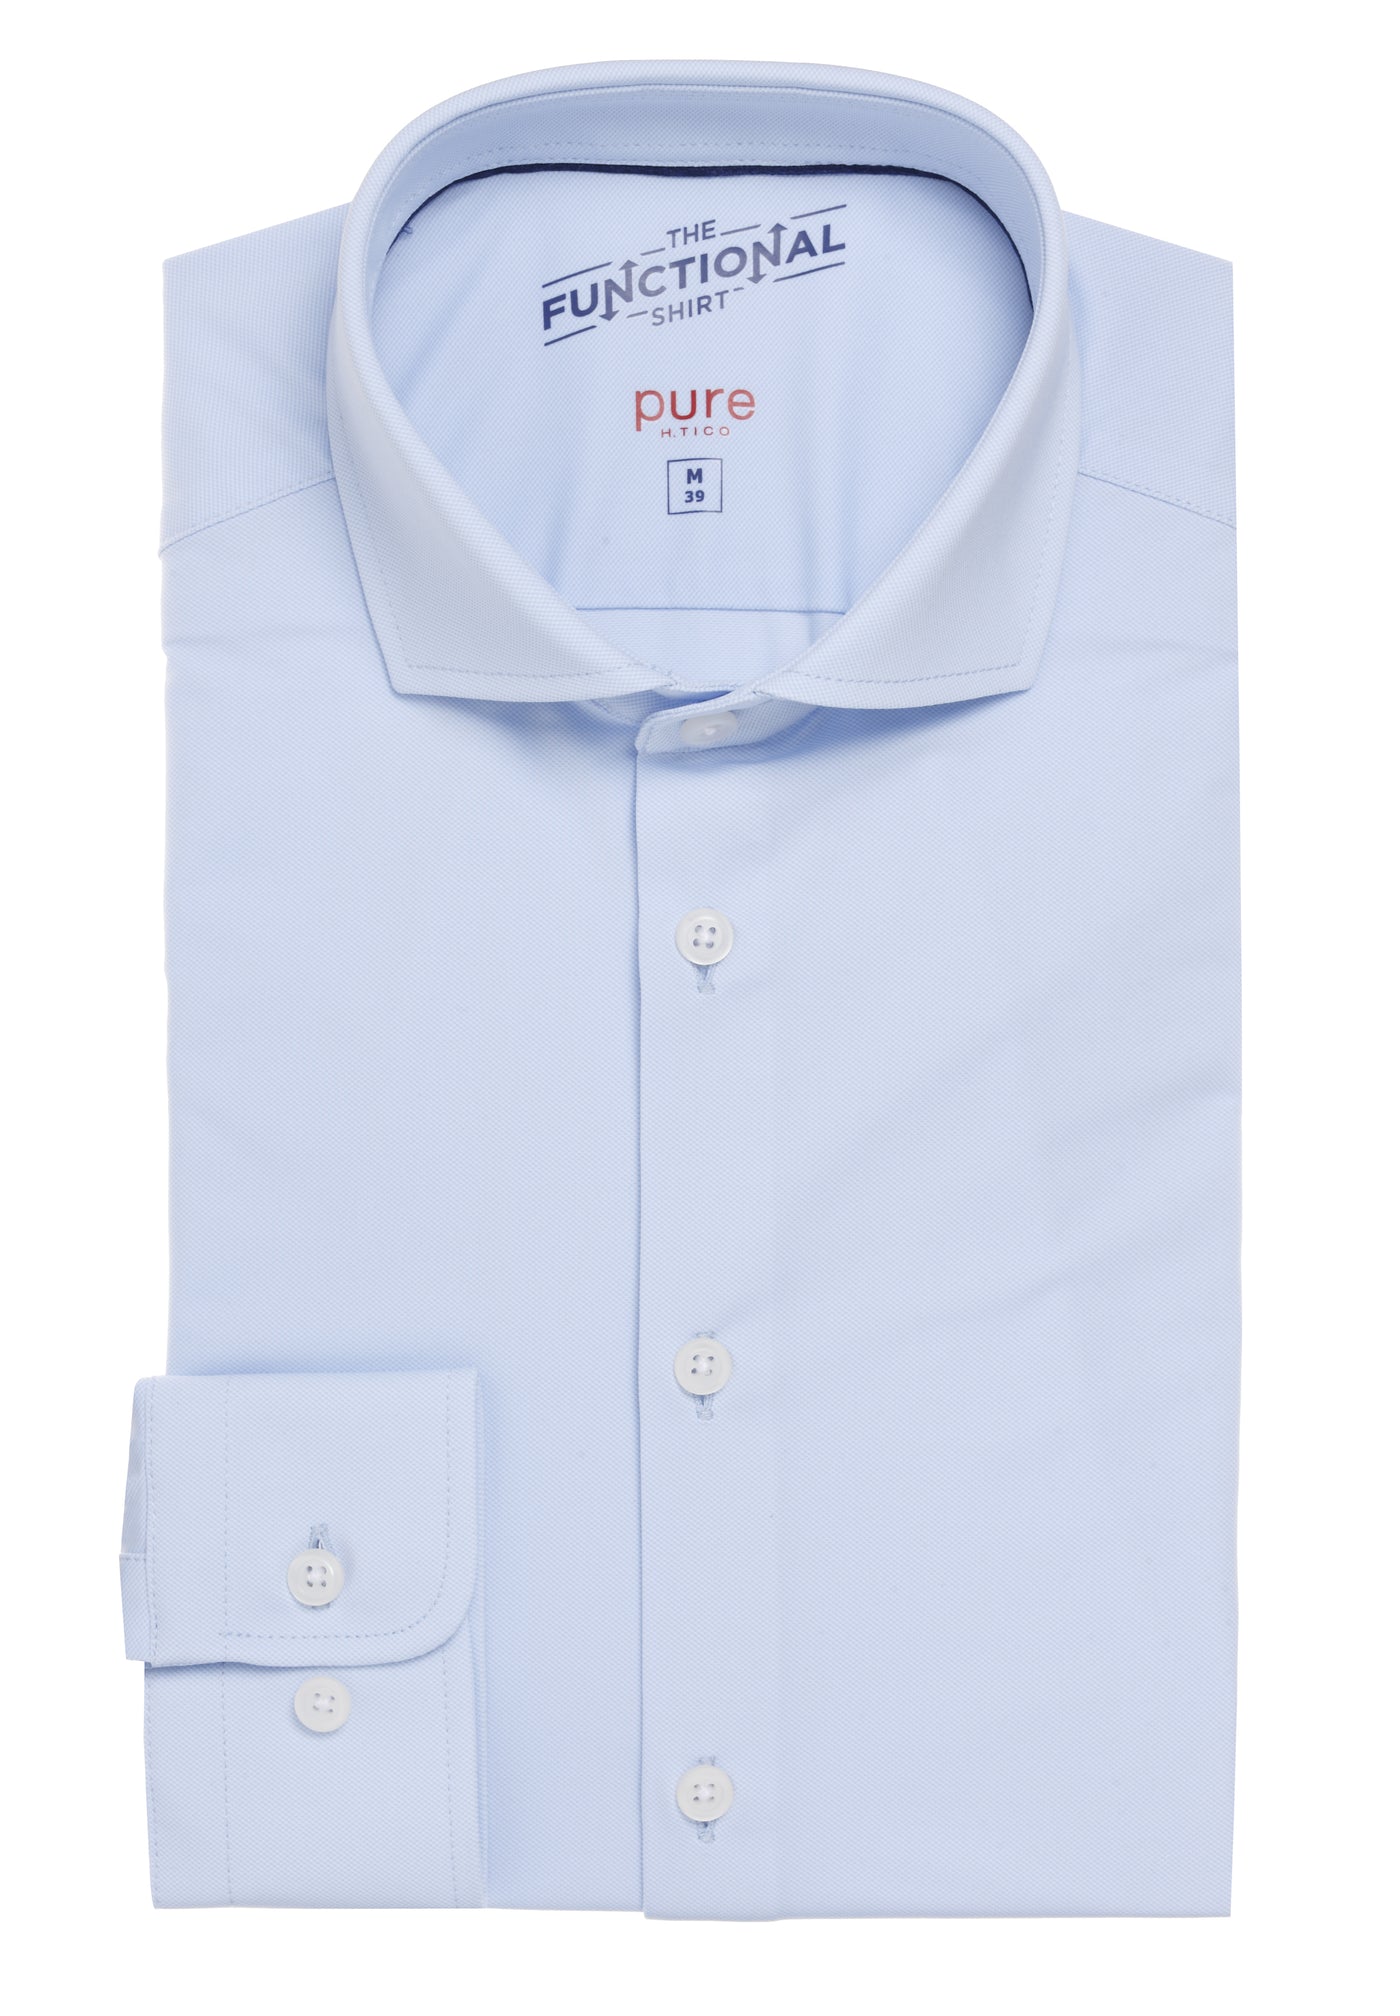 4030-21780 - Functional shirt extra long sleeve - blue